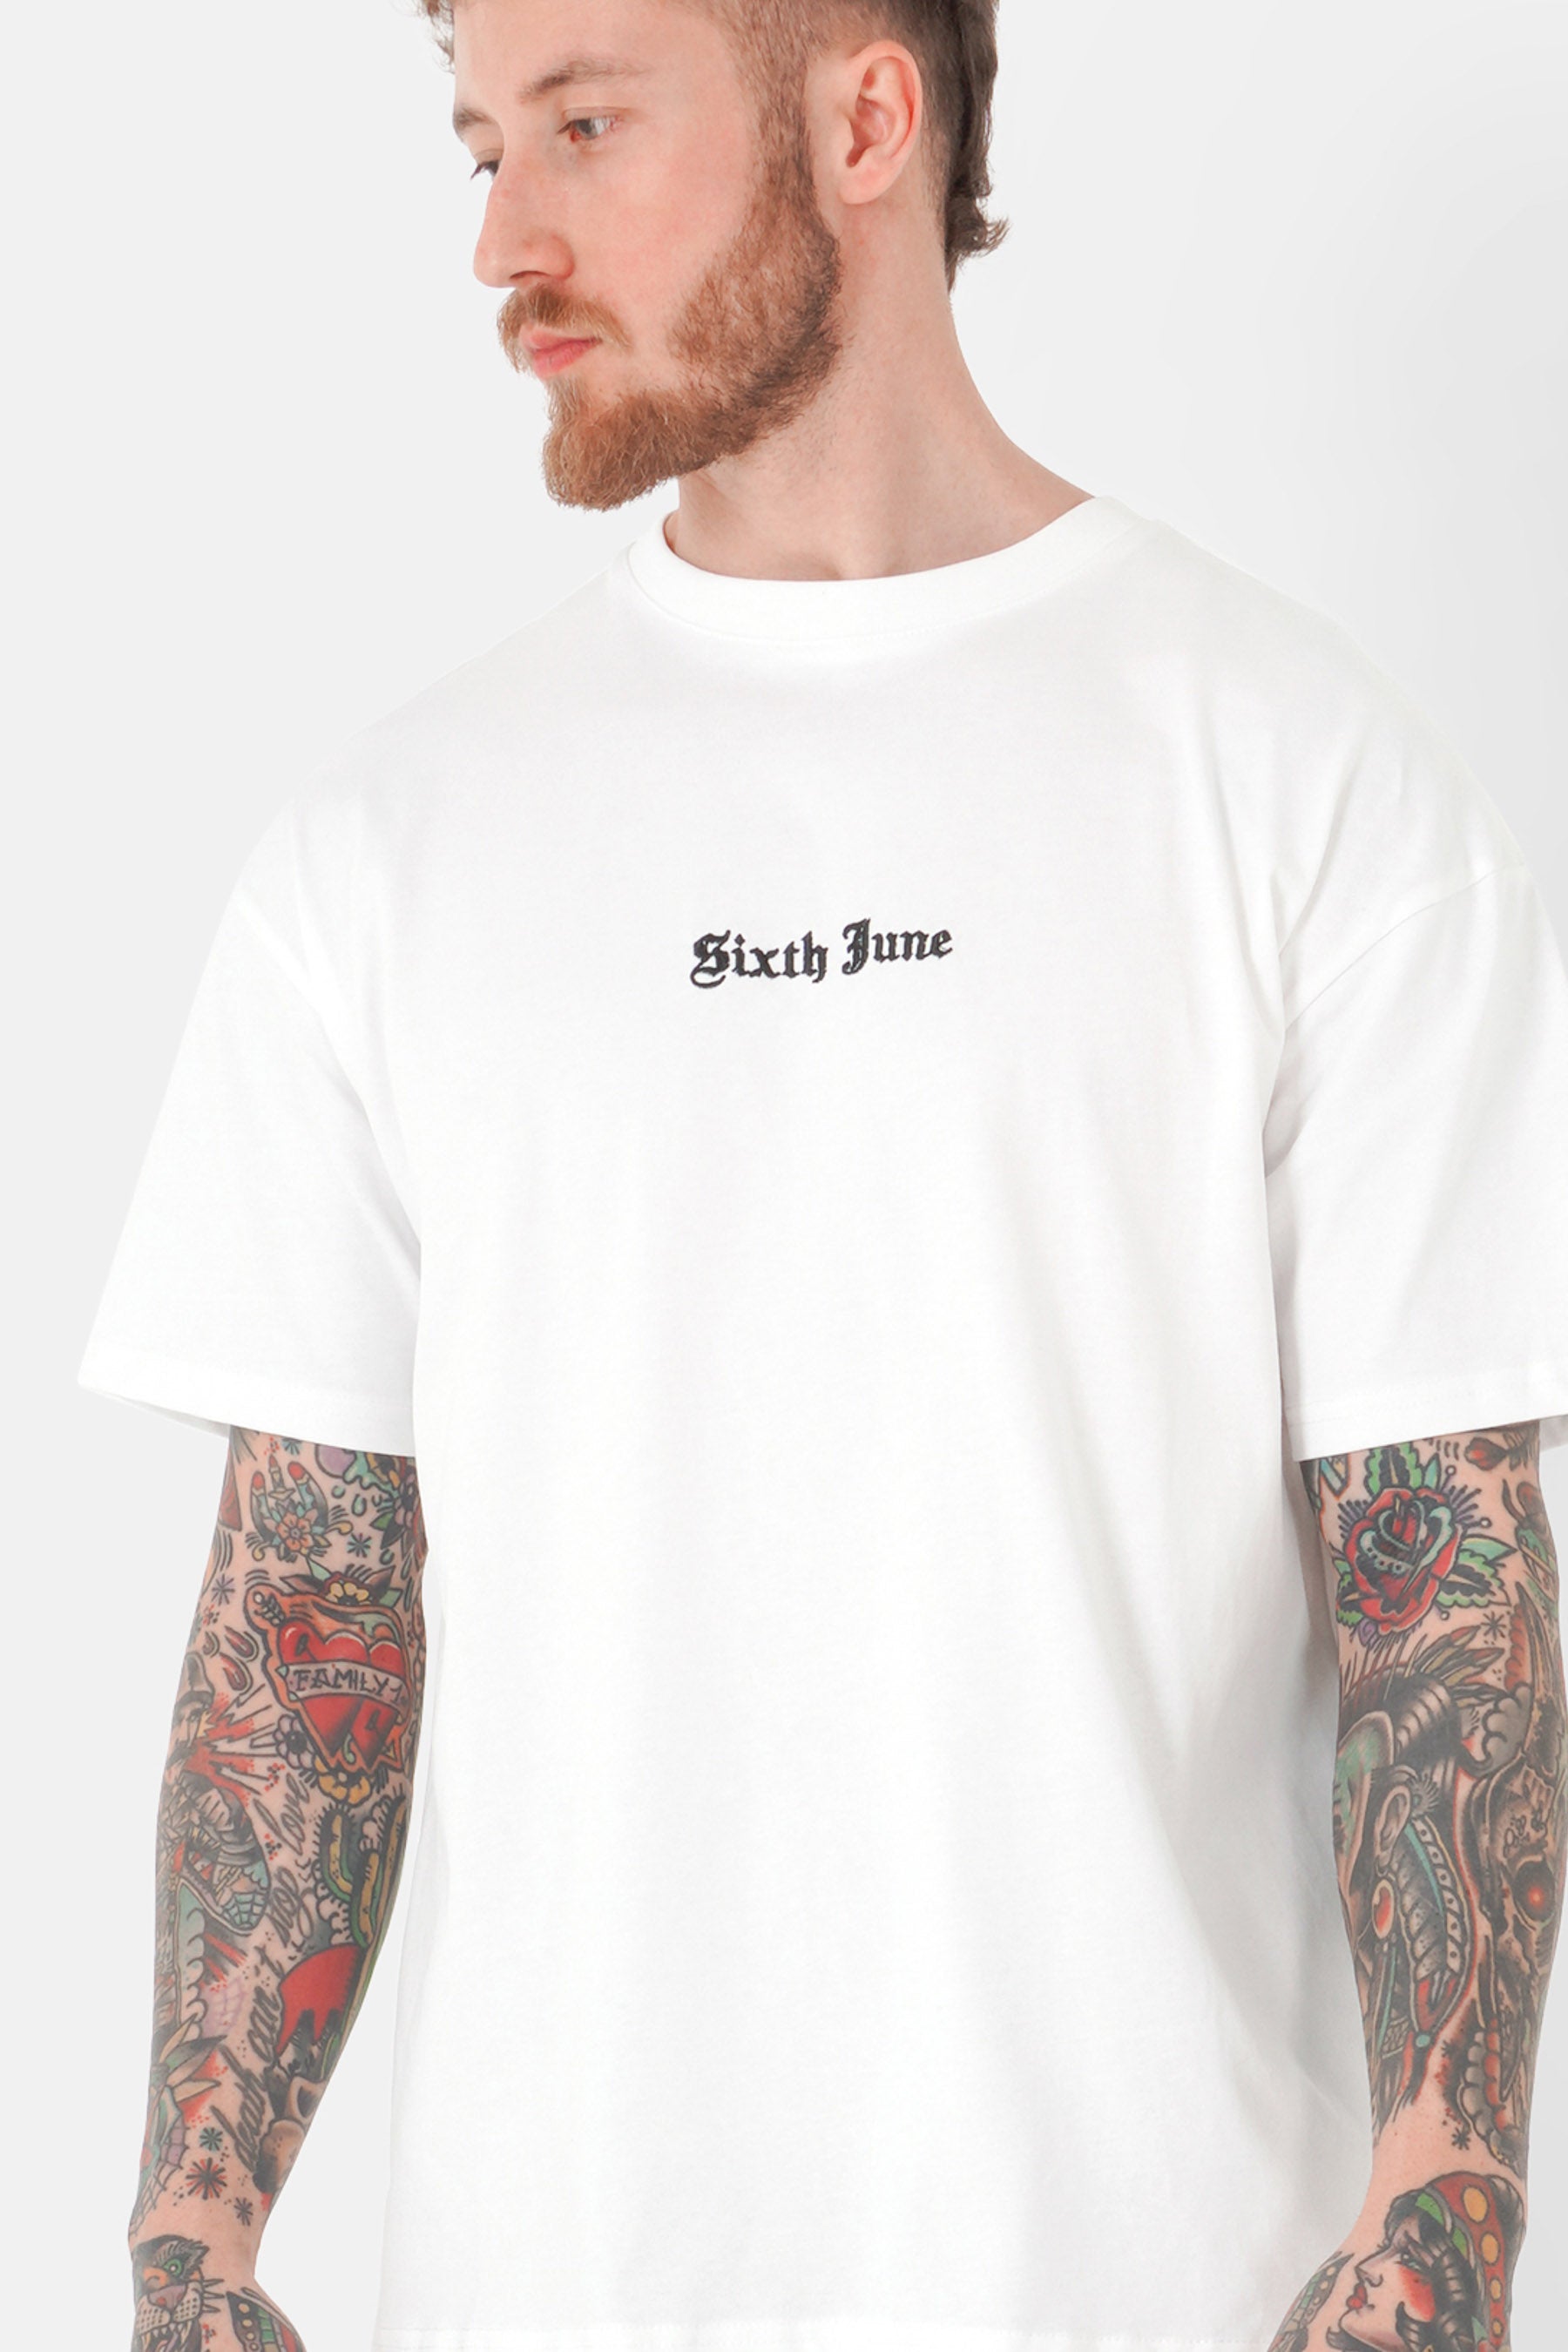 T-shirt broderies crew Blanc